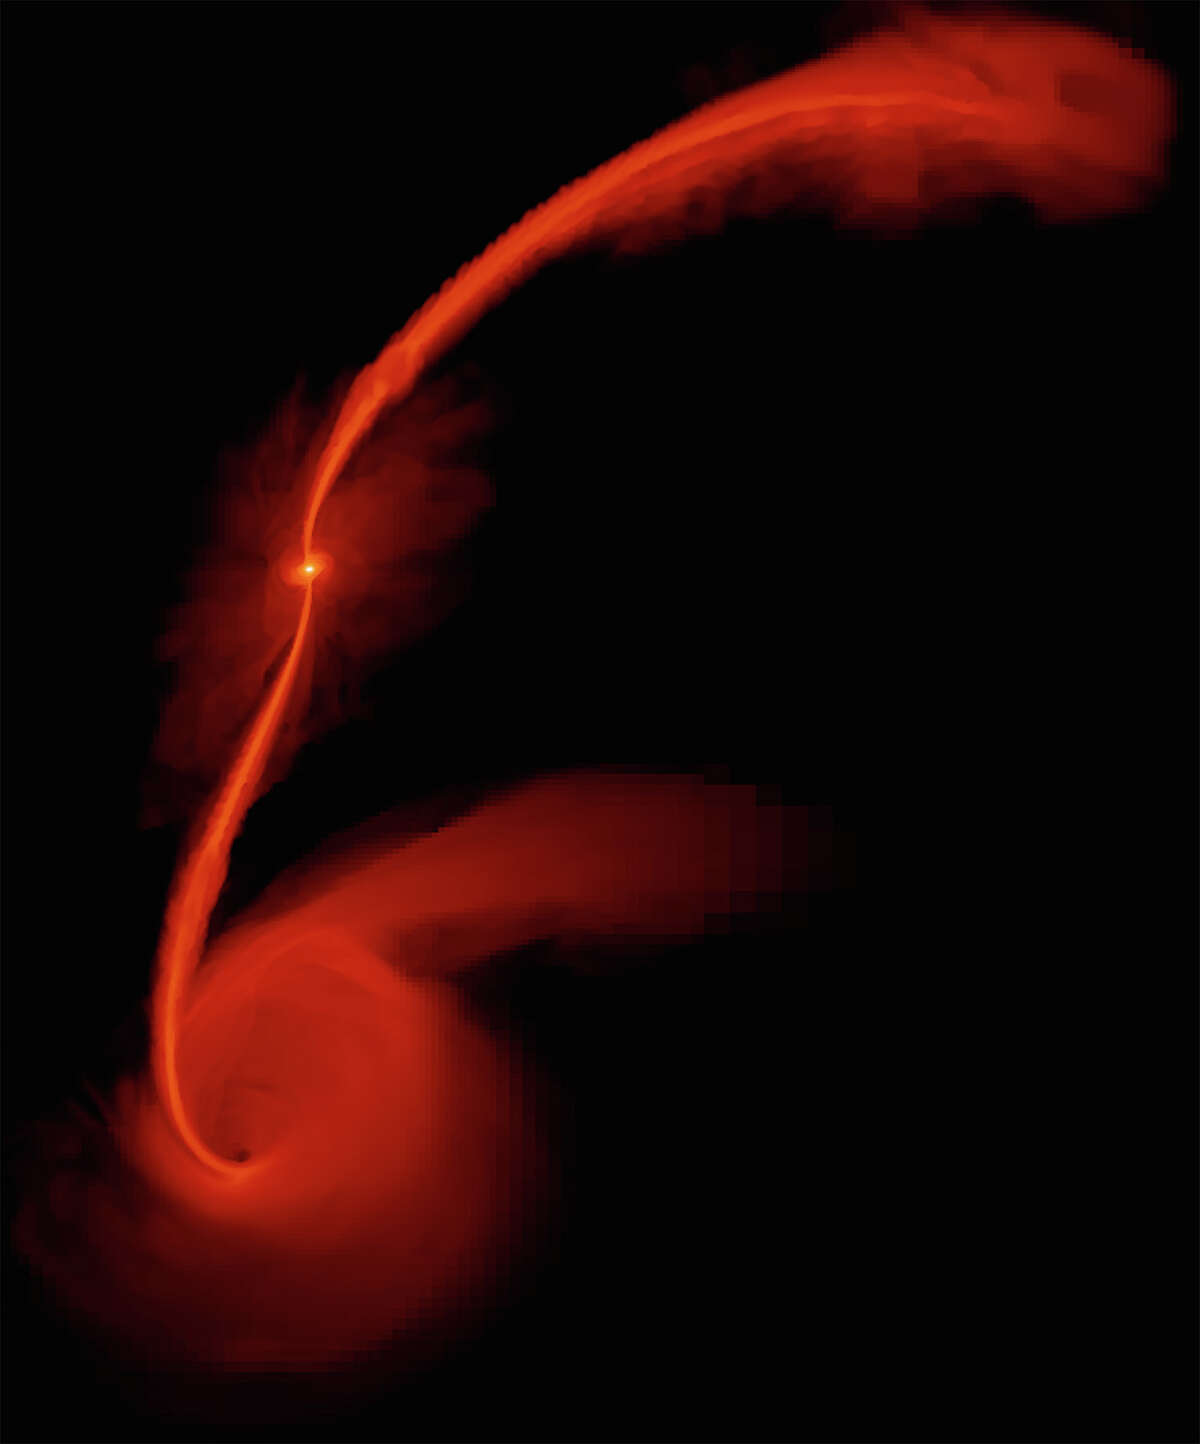 Researchers at UC Santa Cruz witness a black hole devouring a star